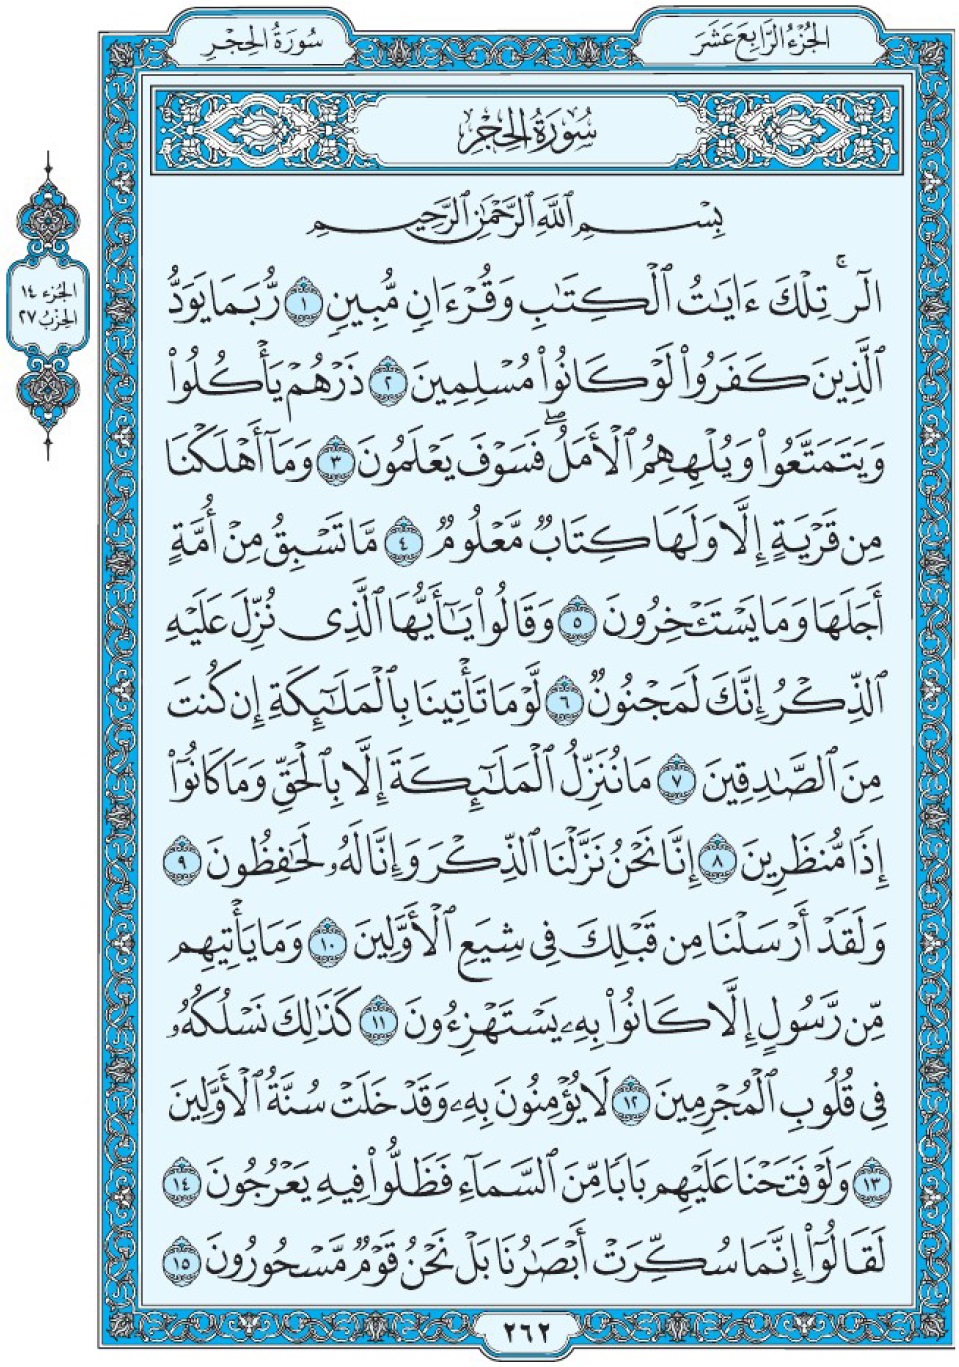 Коран Мединский мусхаф страница 262, сура 15 Аль-Хиджр سورة ١٥ الحجر 